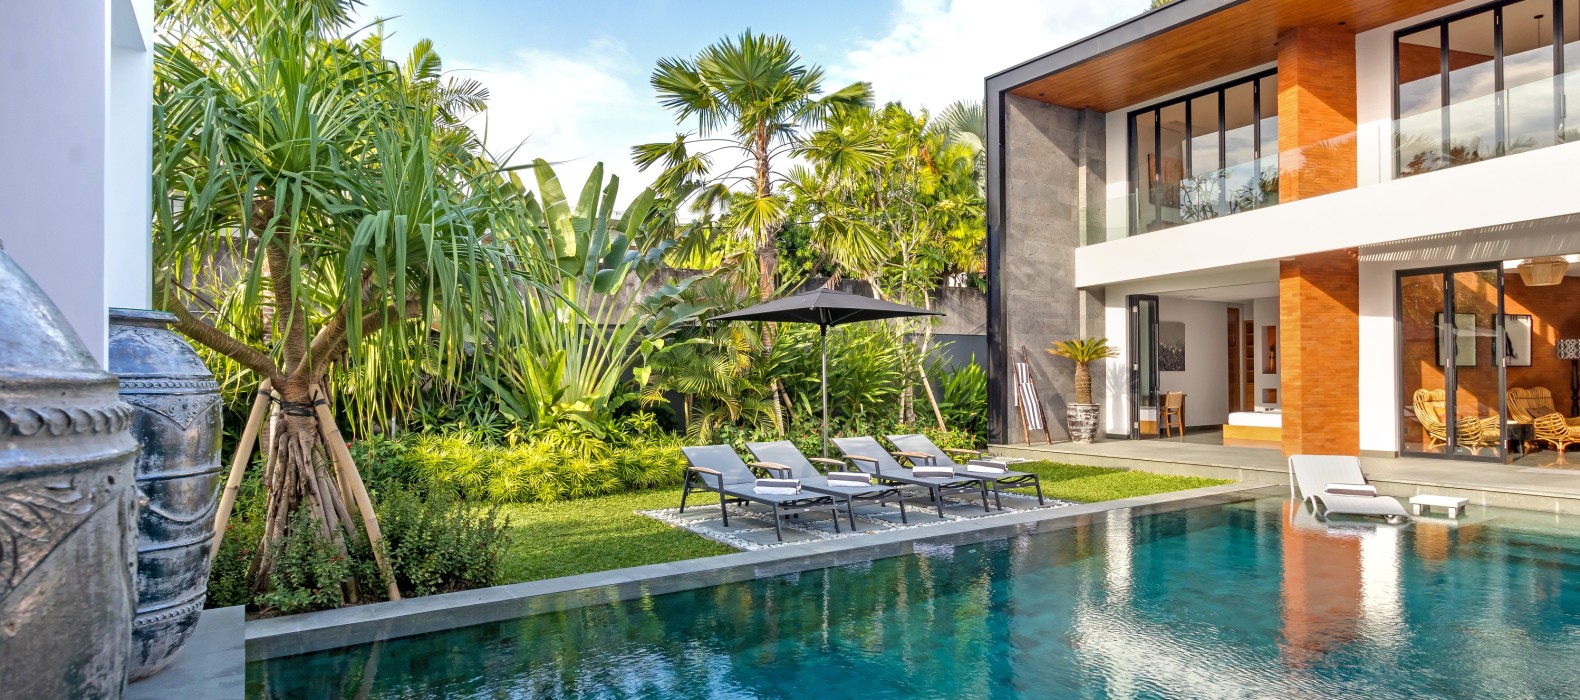 Exterior pool area of Villa Castil de Udara in Bali